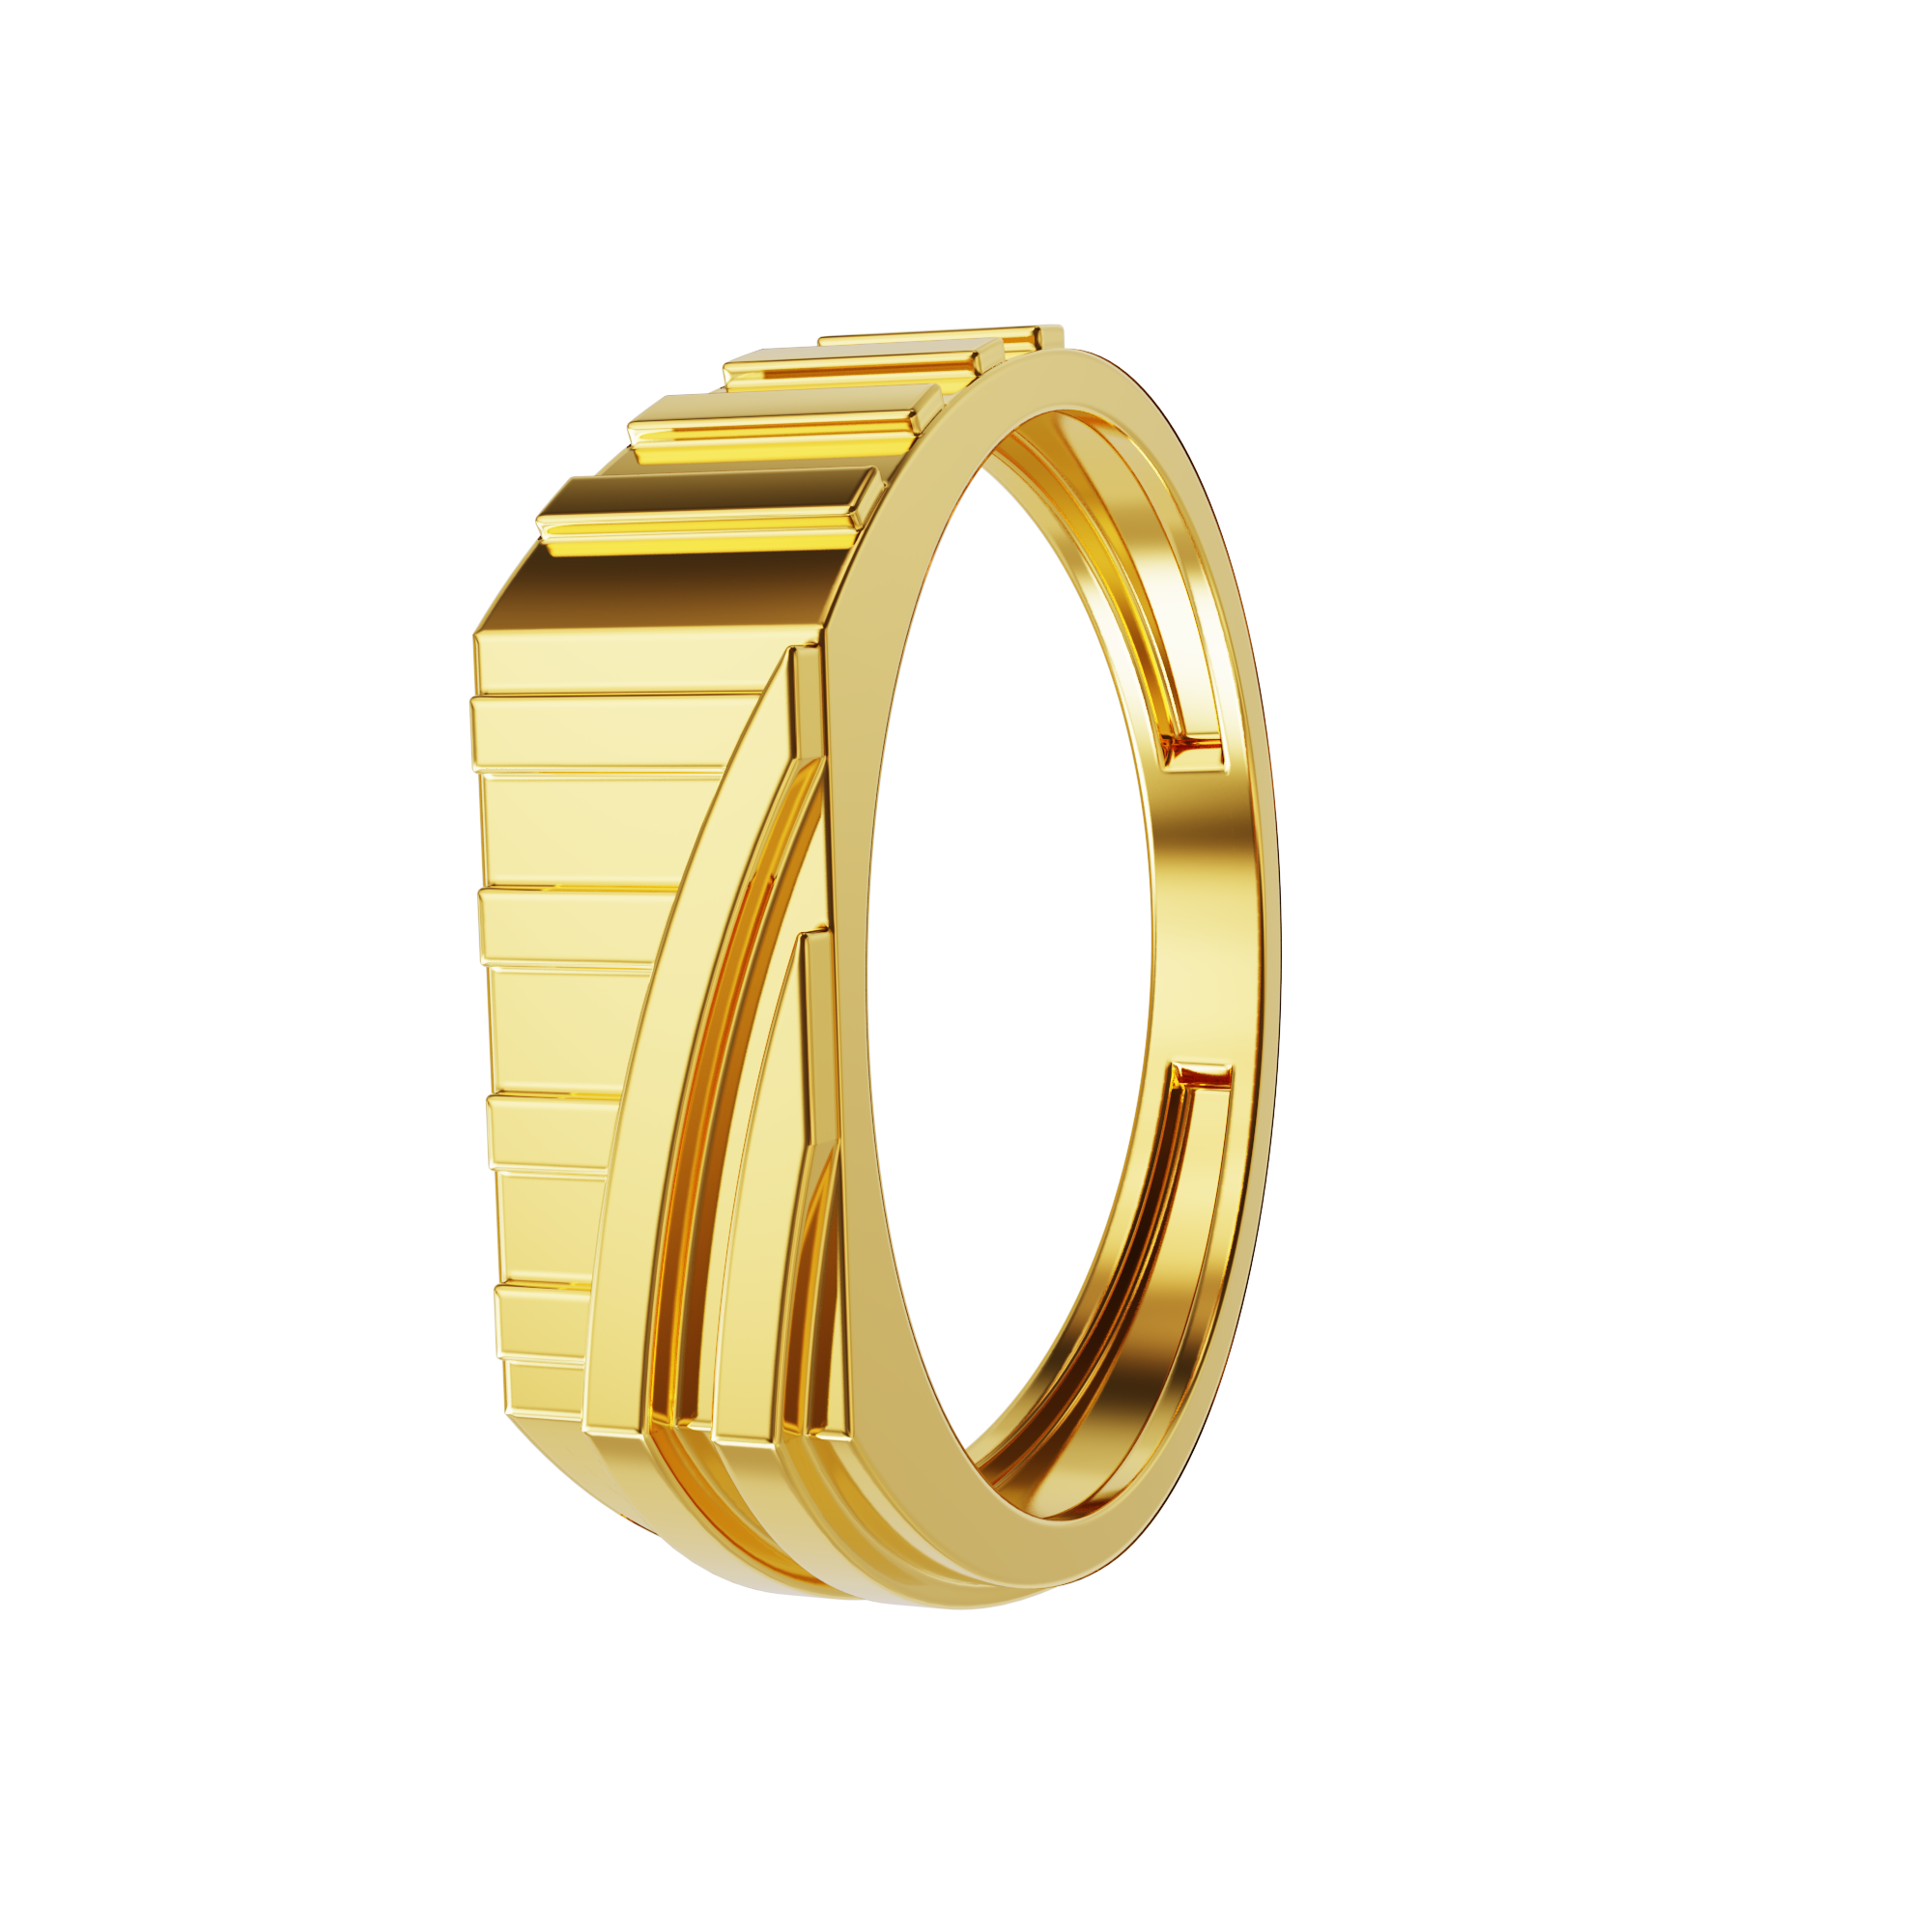 Red garnet ring for men in 18k gold